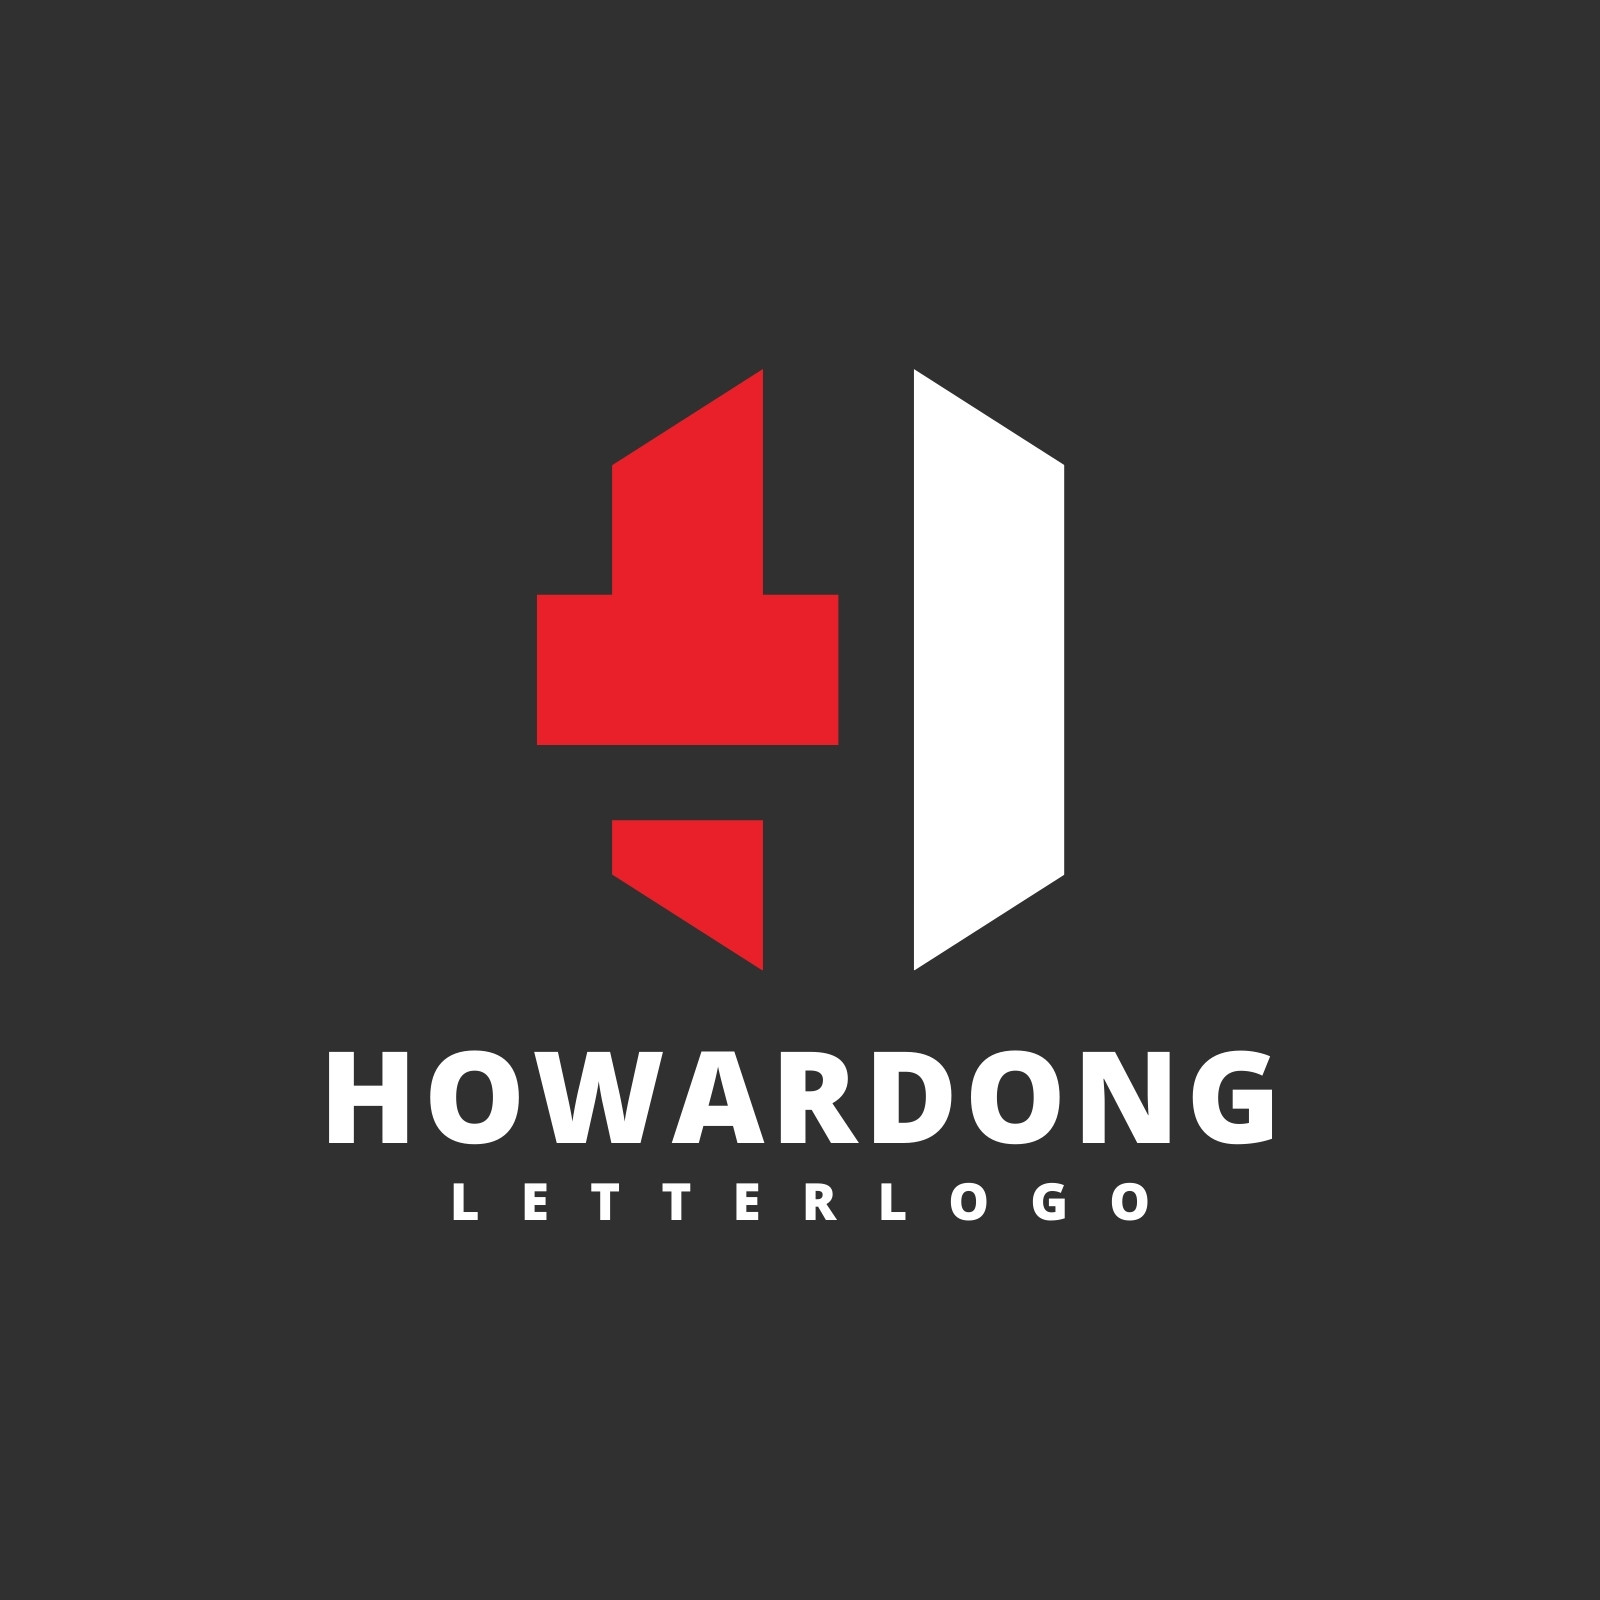 Free to use and customize monogram logo templates